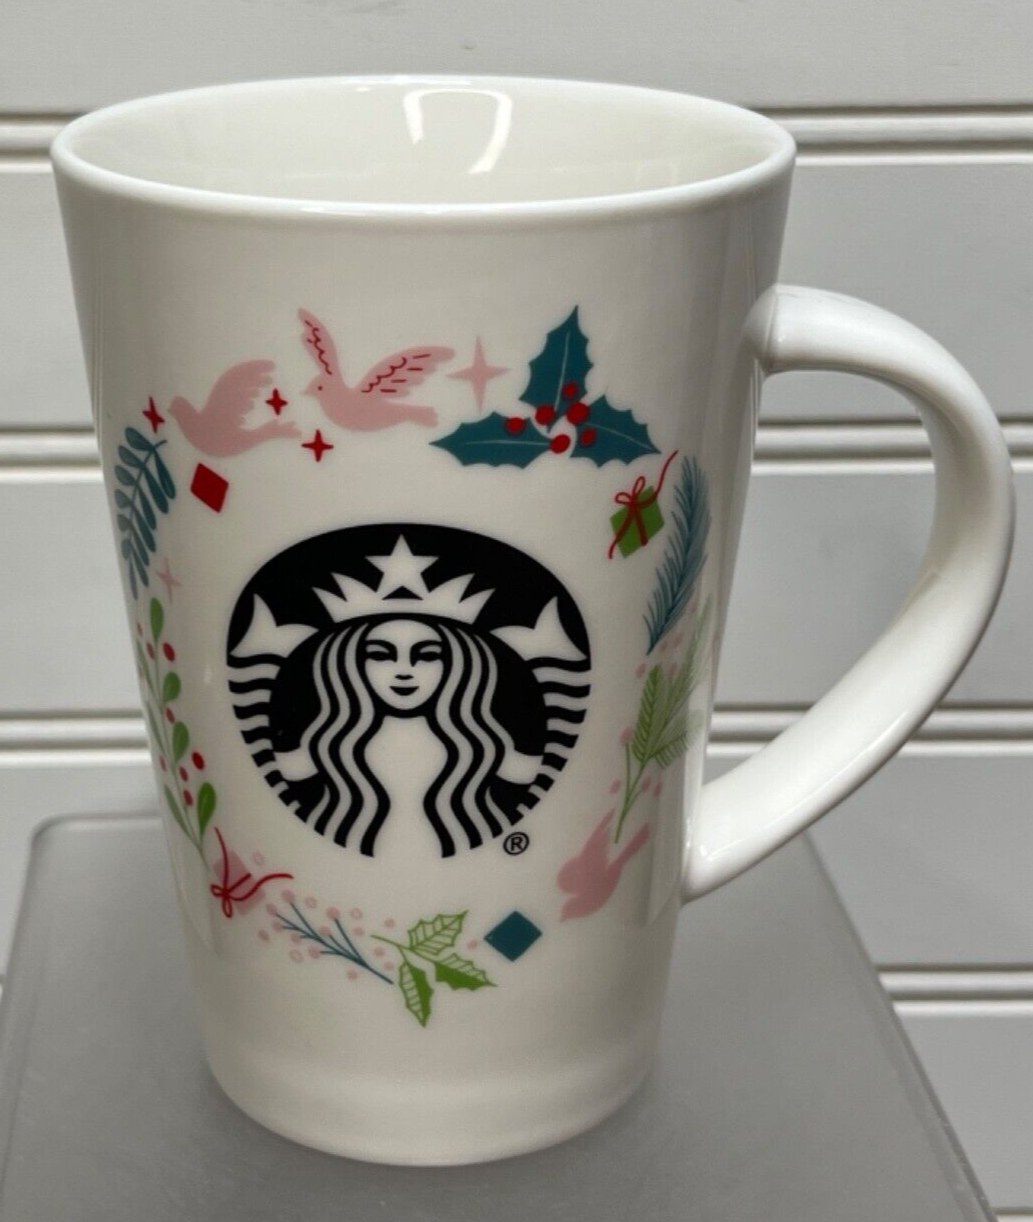 Starbucks Holiday Ceramic Coffee Mug 12 oz. Christmas Holly & Doves - $12.00